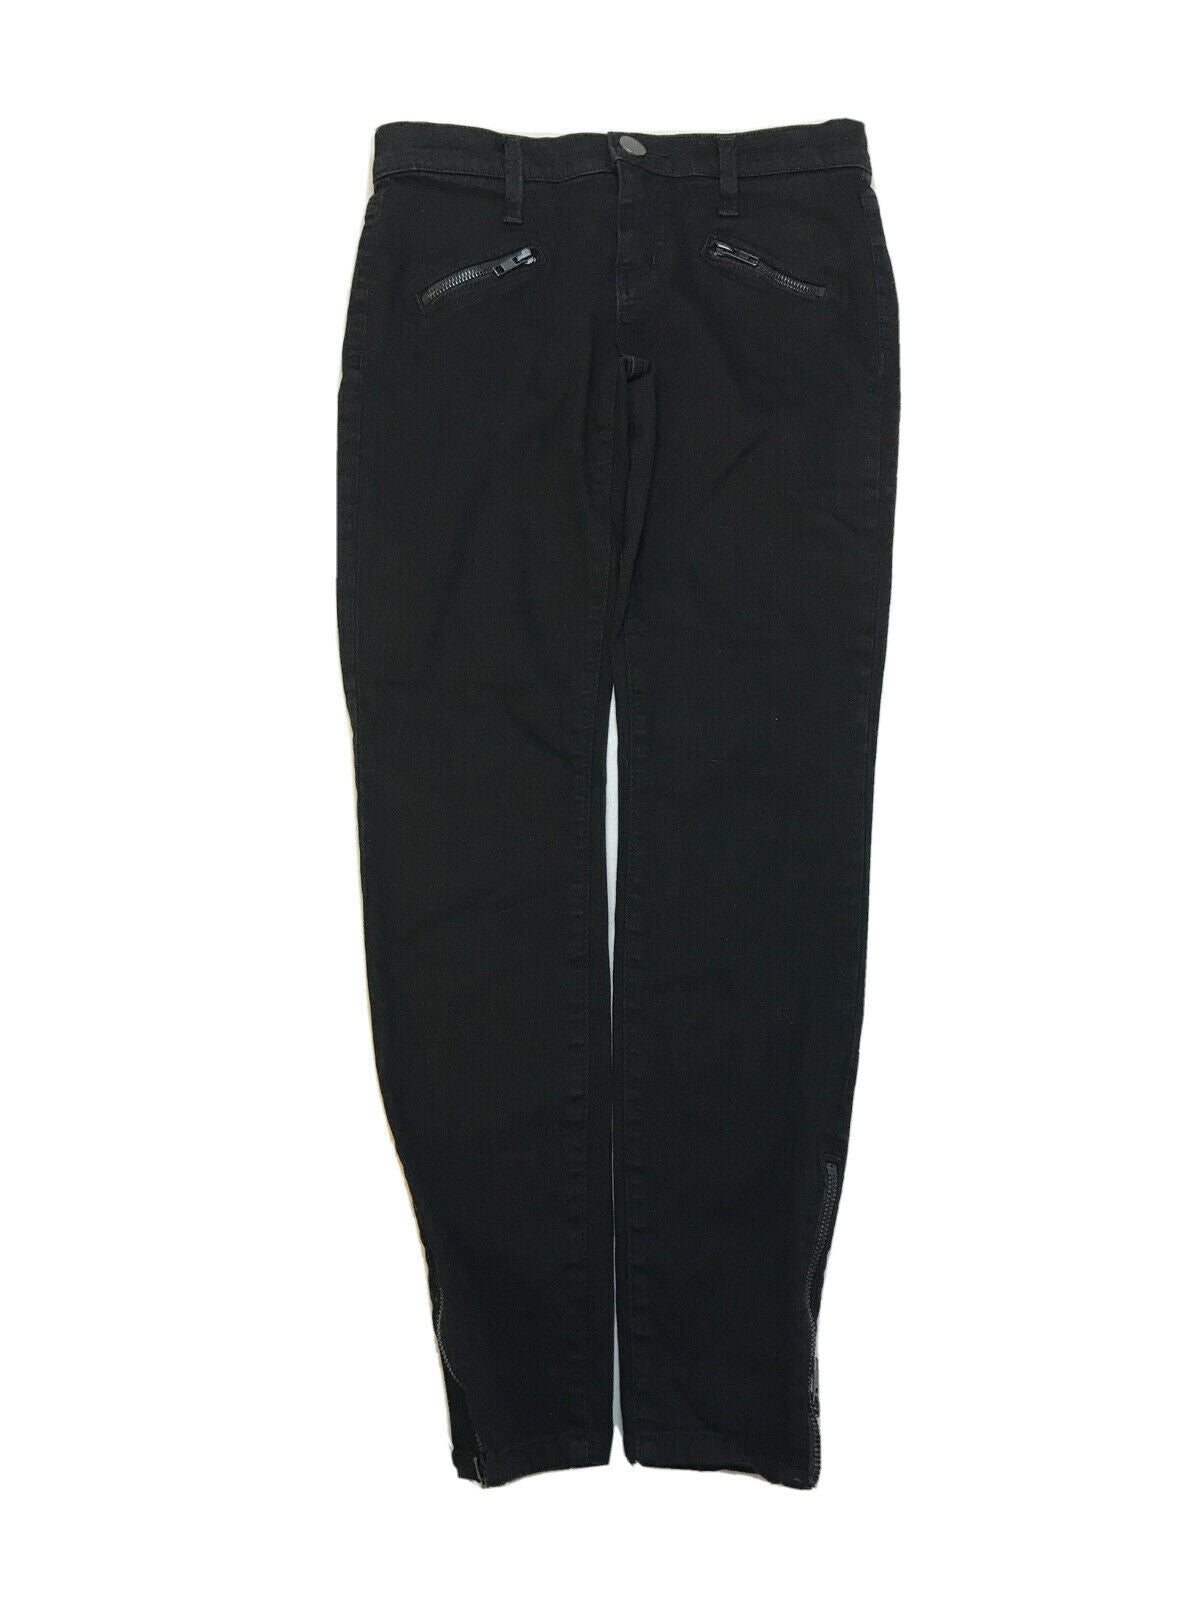 Current/Elliott Women's Black Denim Stretch Skinny Jeans Sz 26